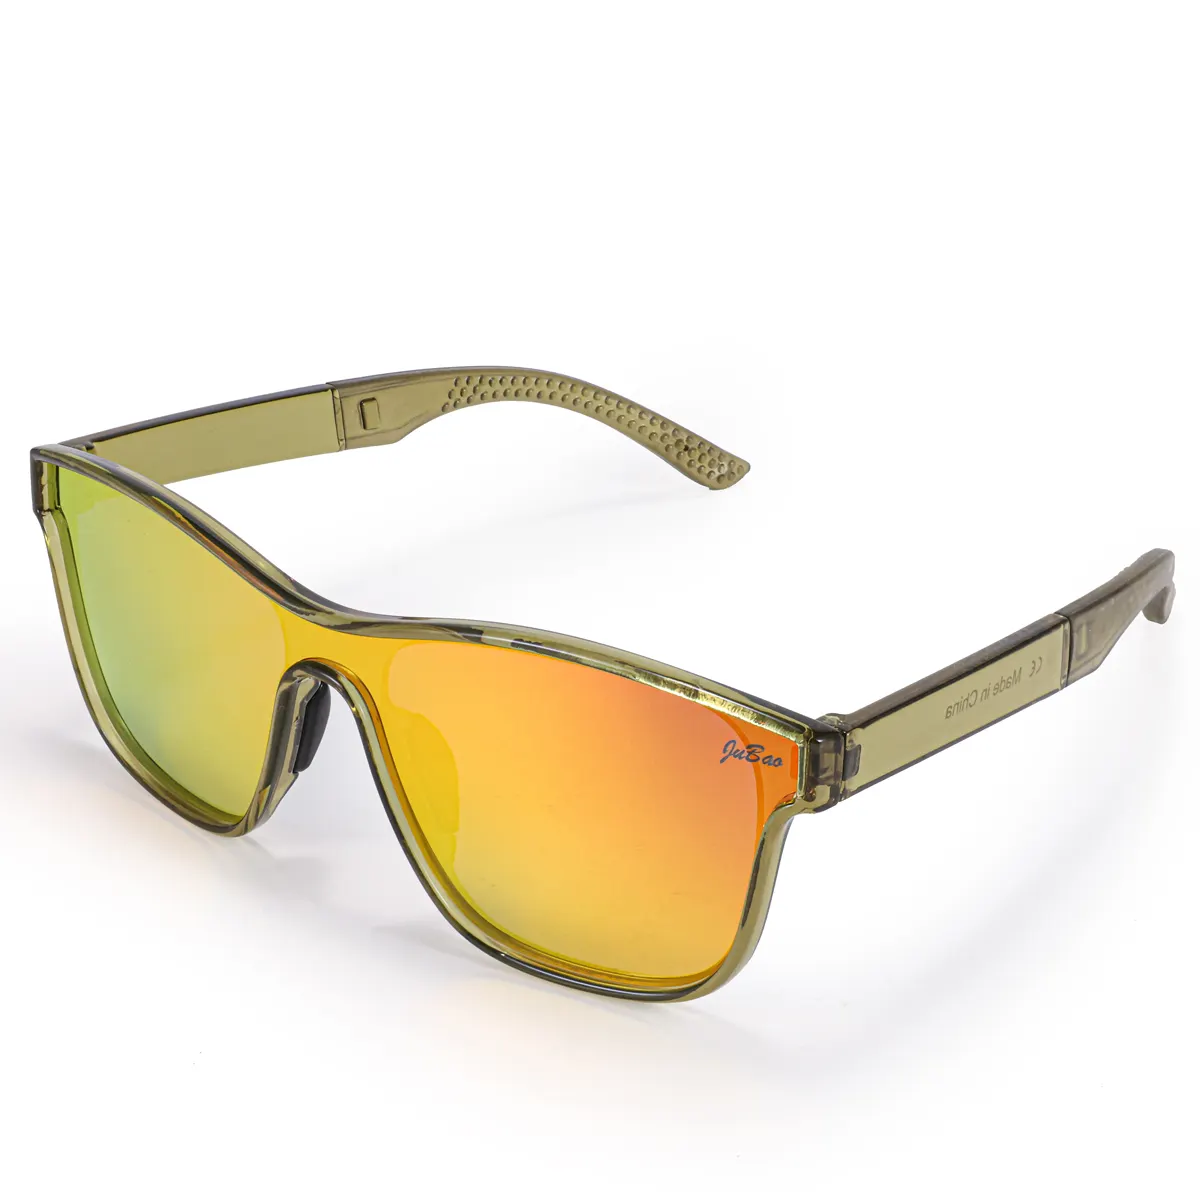 HUBO 508 polarized sport sunglasses UV400 hiking running fishing driving road bike glasses rockbros sunglasses for men women